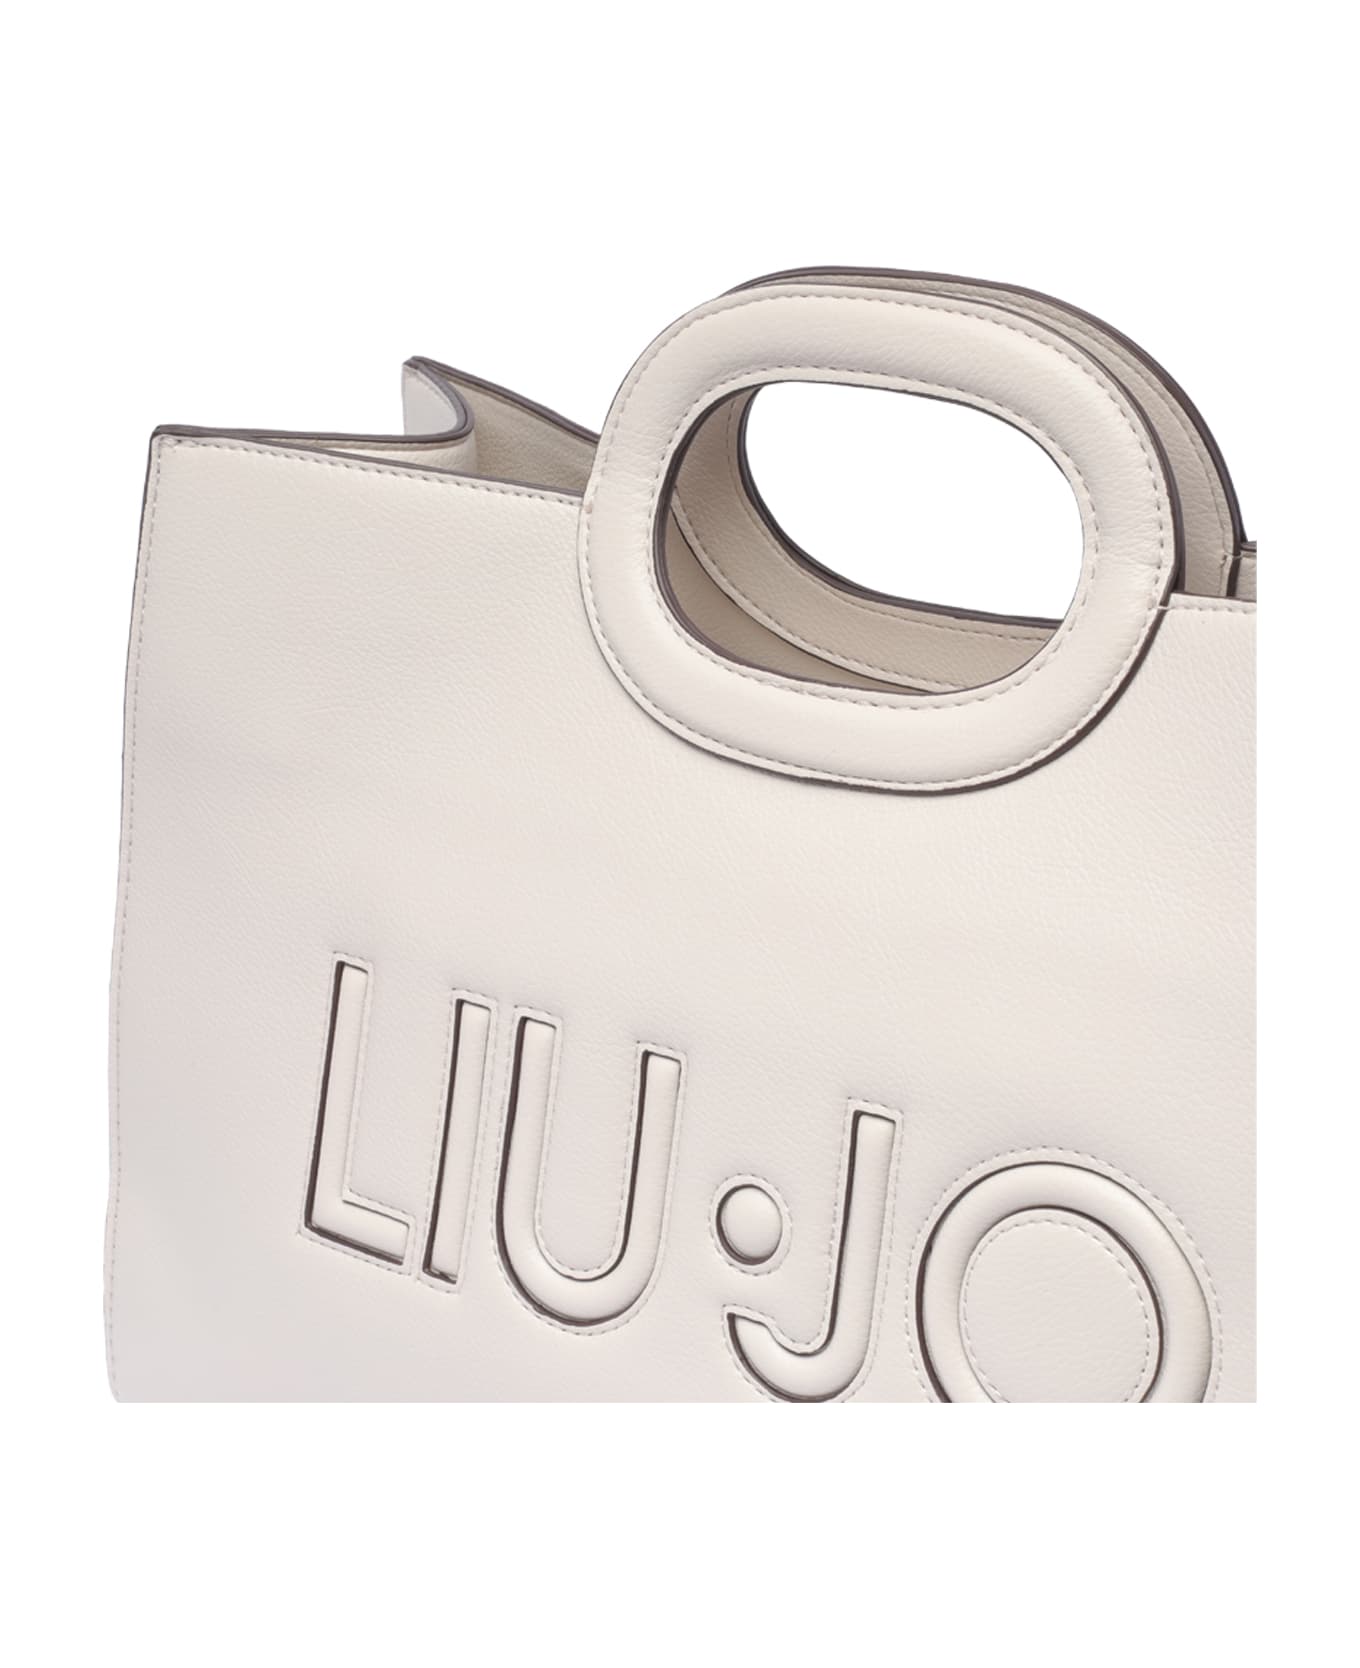 Liu-Jo Large Logo Tote Bag - Grey トートバッグ